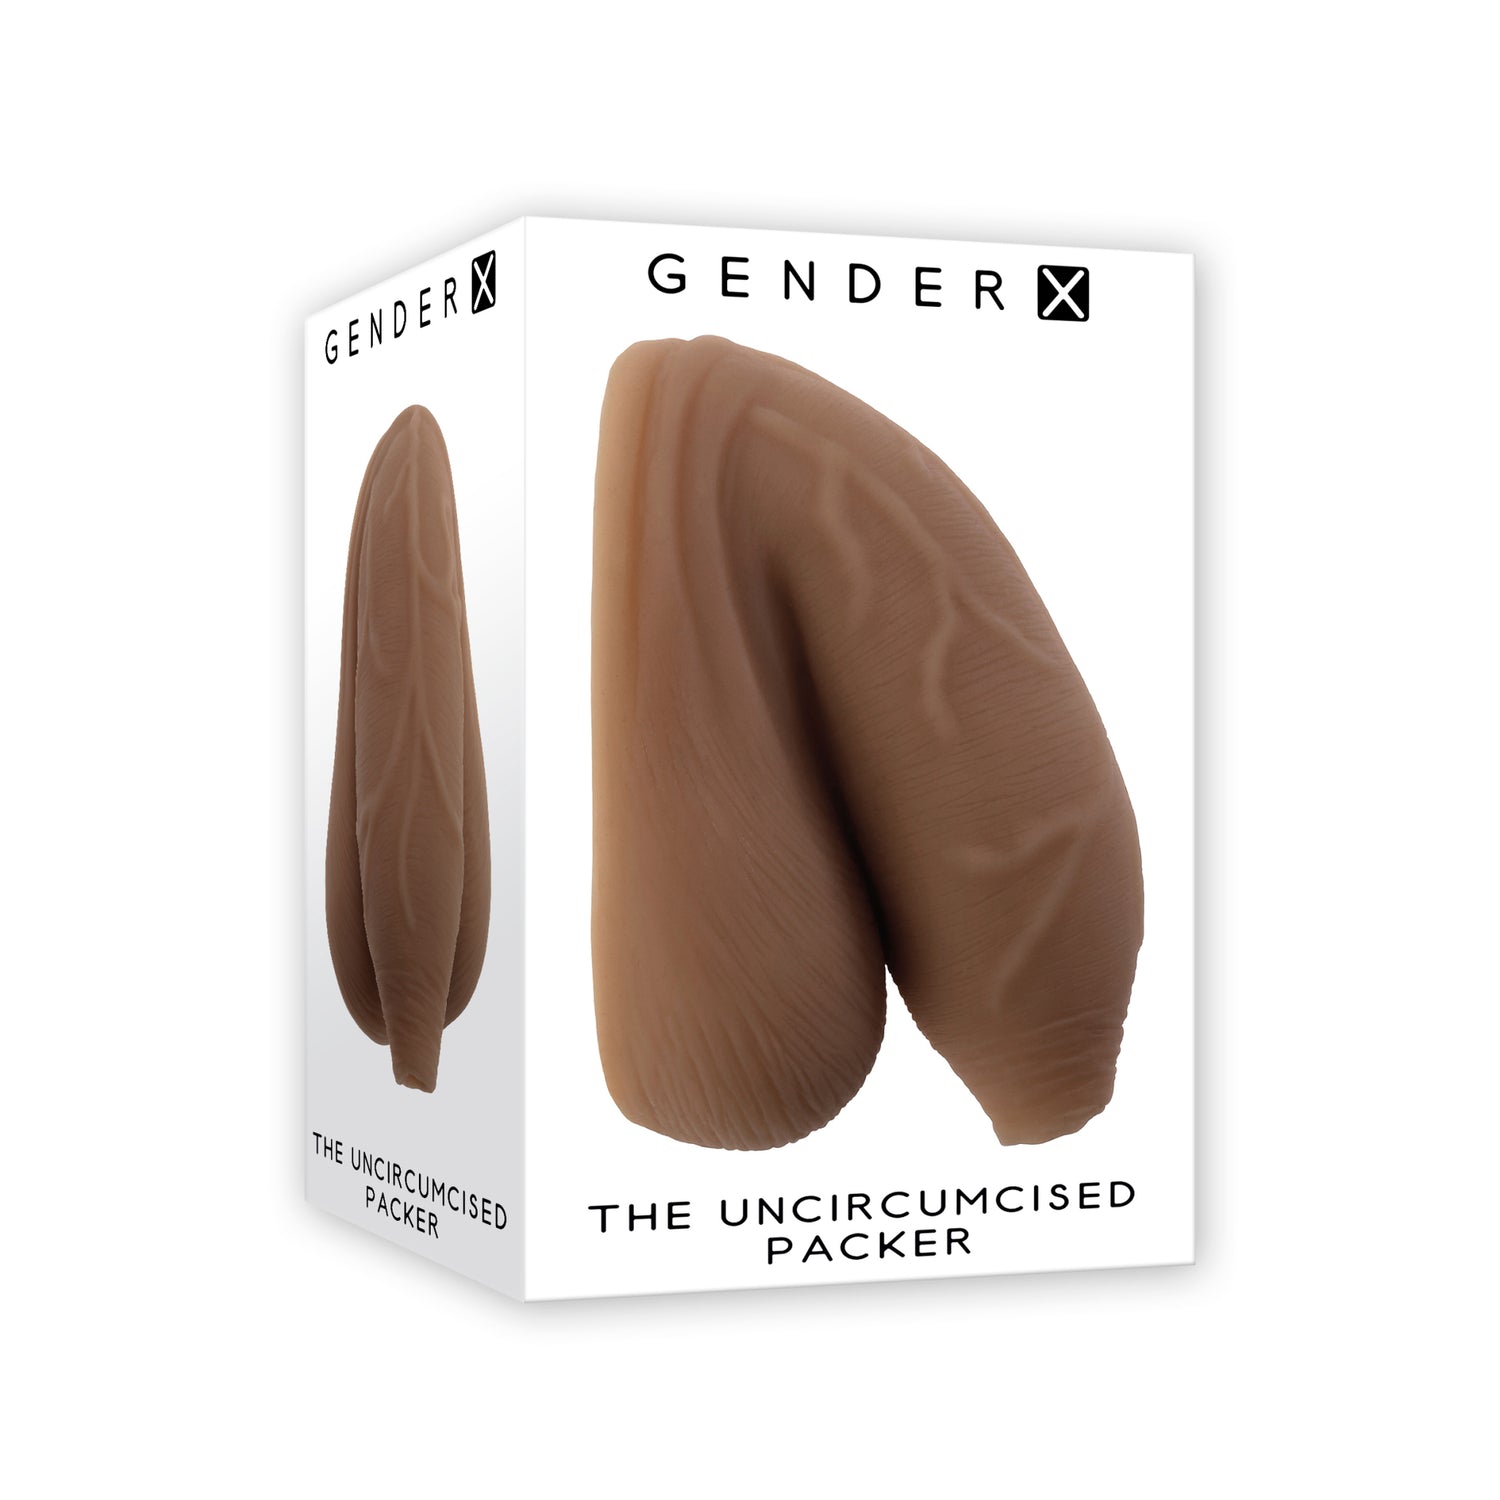 Gender-X Uncircumcised Packer - Dark